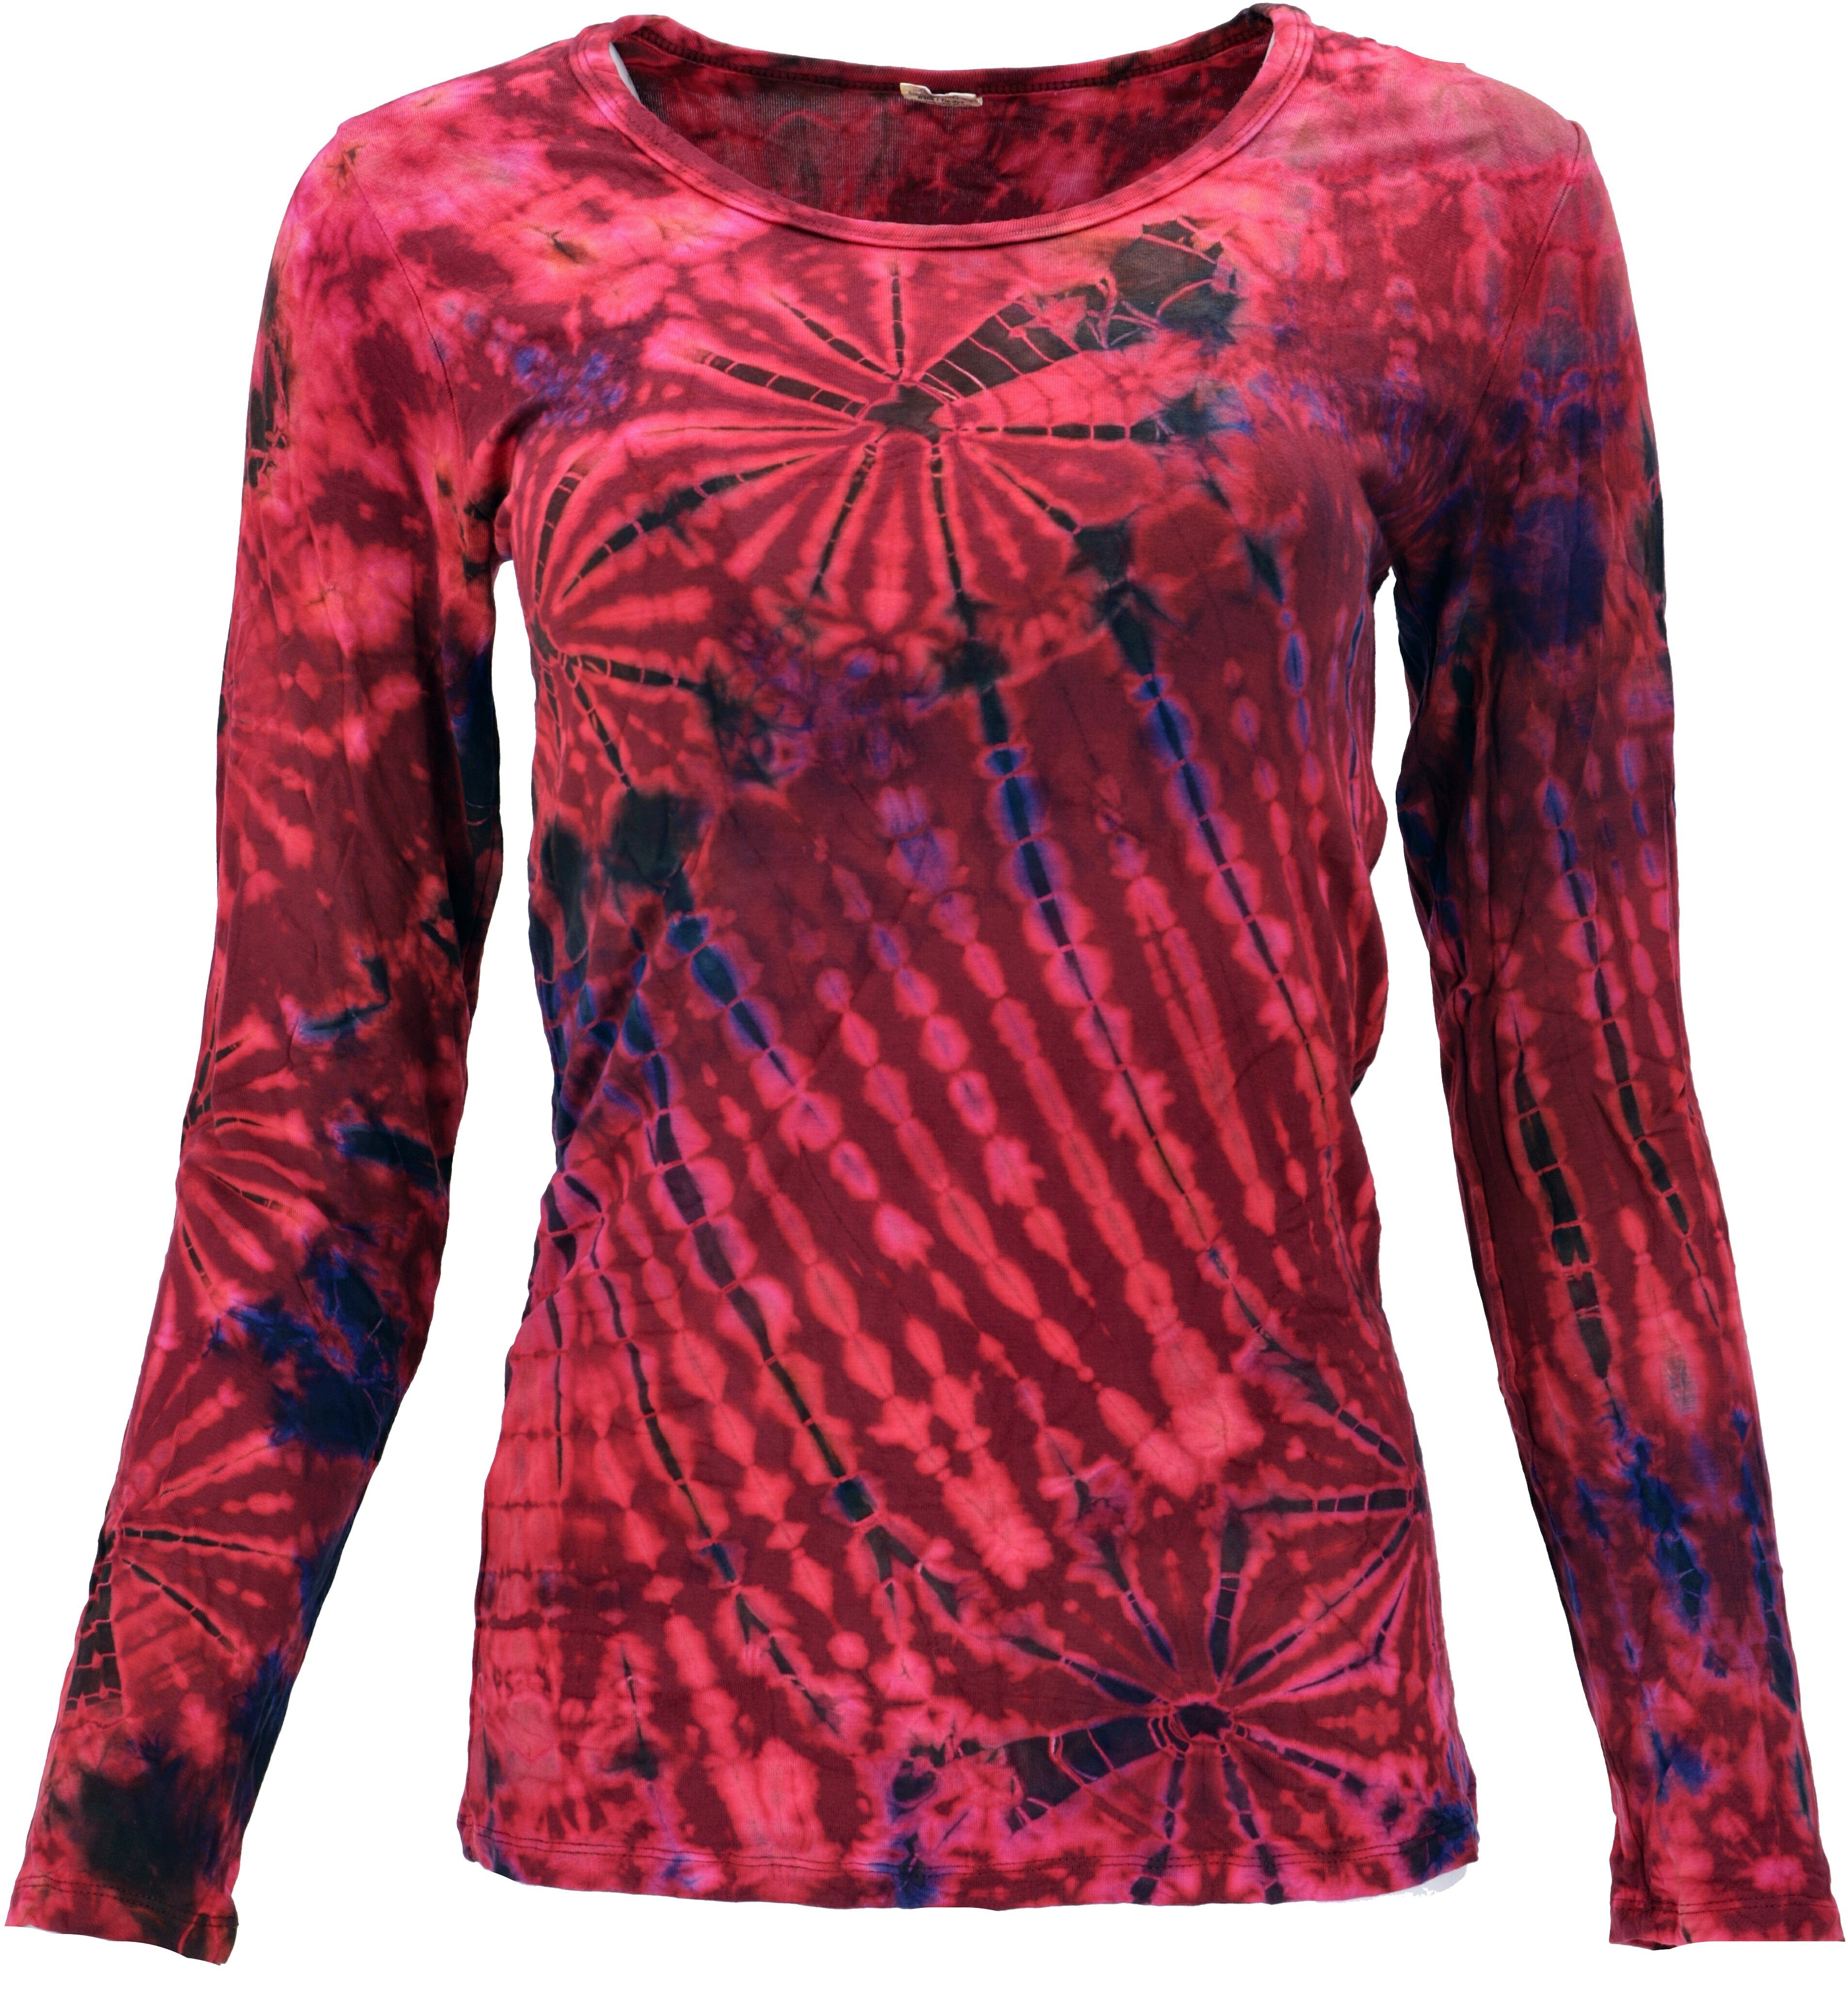 Guru-Shop Longsleeve Unikat Batik Shirt, Boho Langarmshirt - rot alternative Bekleidung